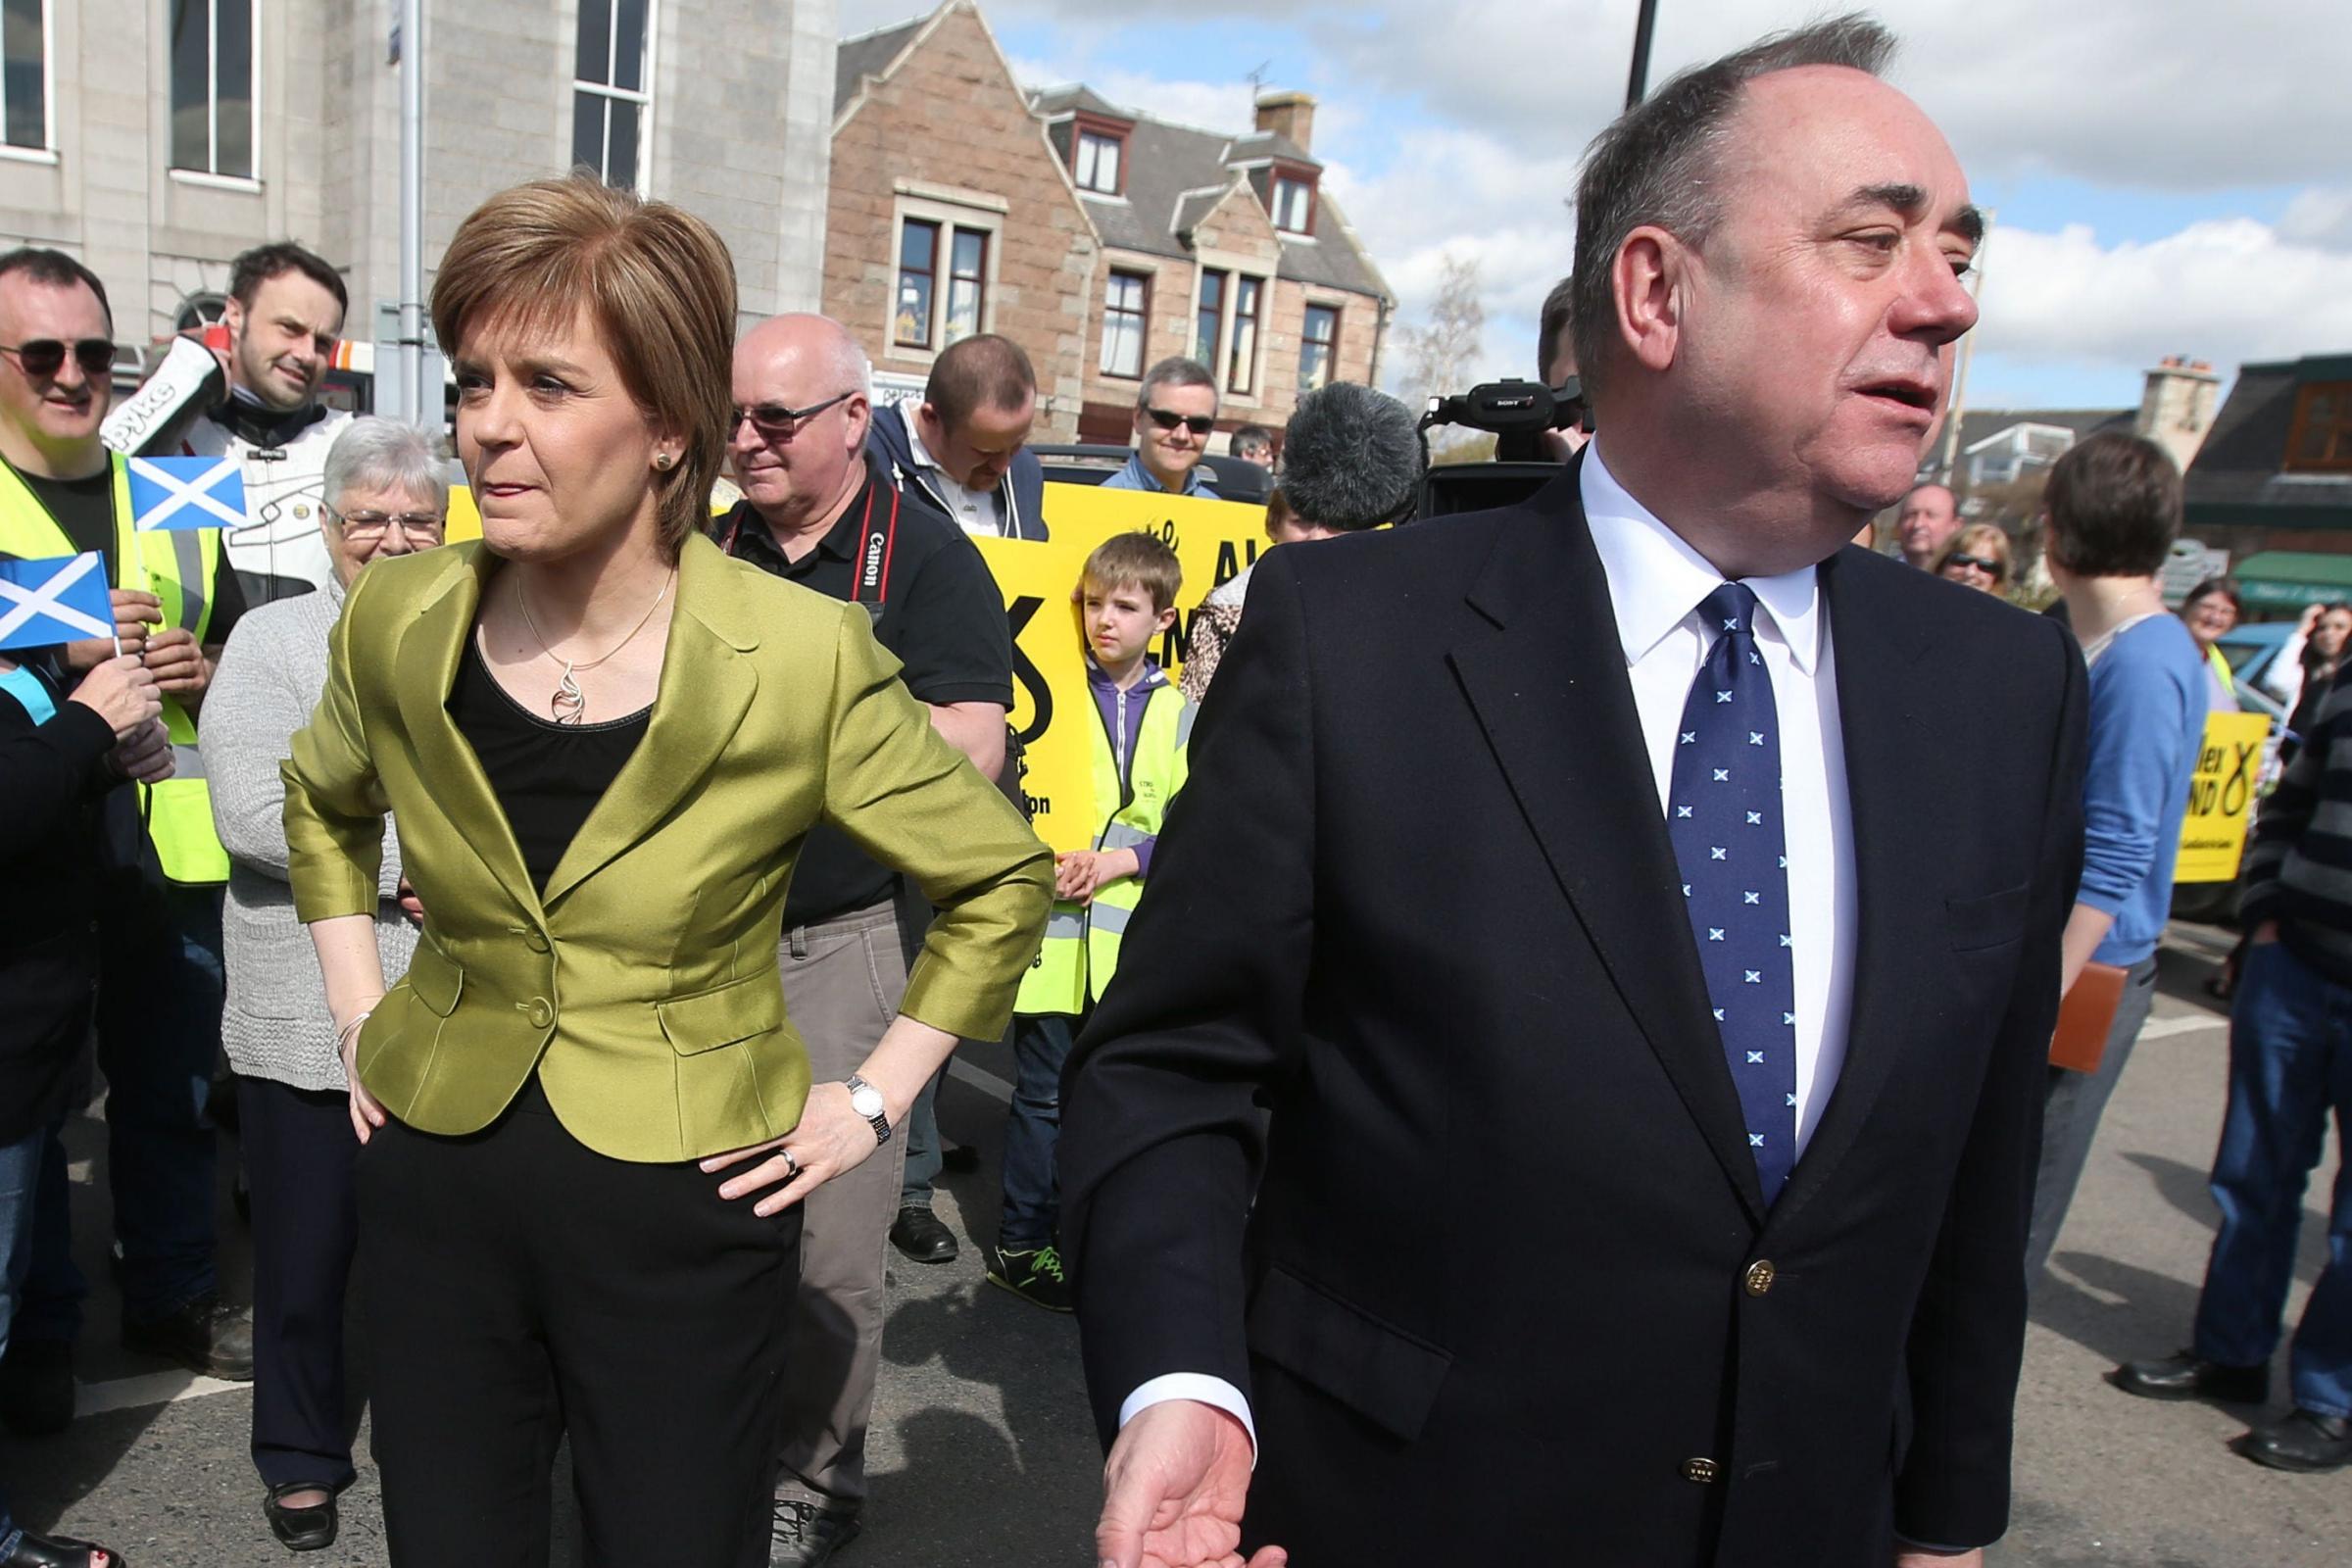 Sturgeon says she will 'vigorously' refute Salmond's claims